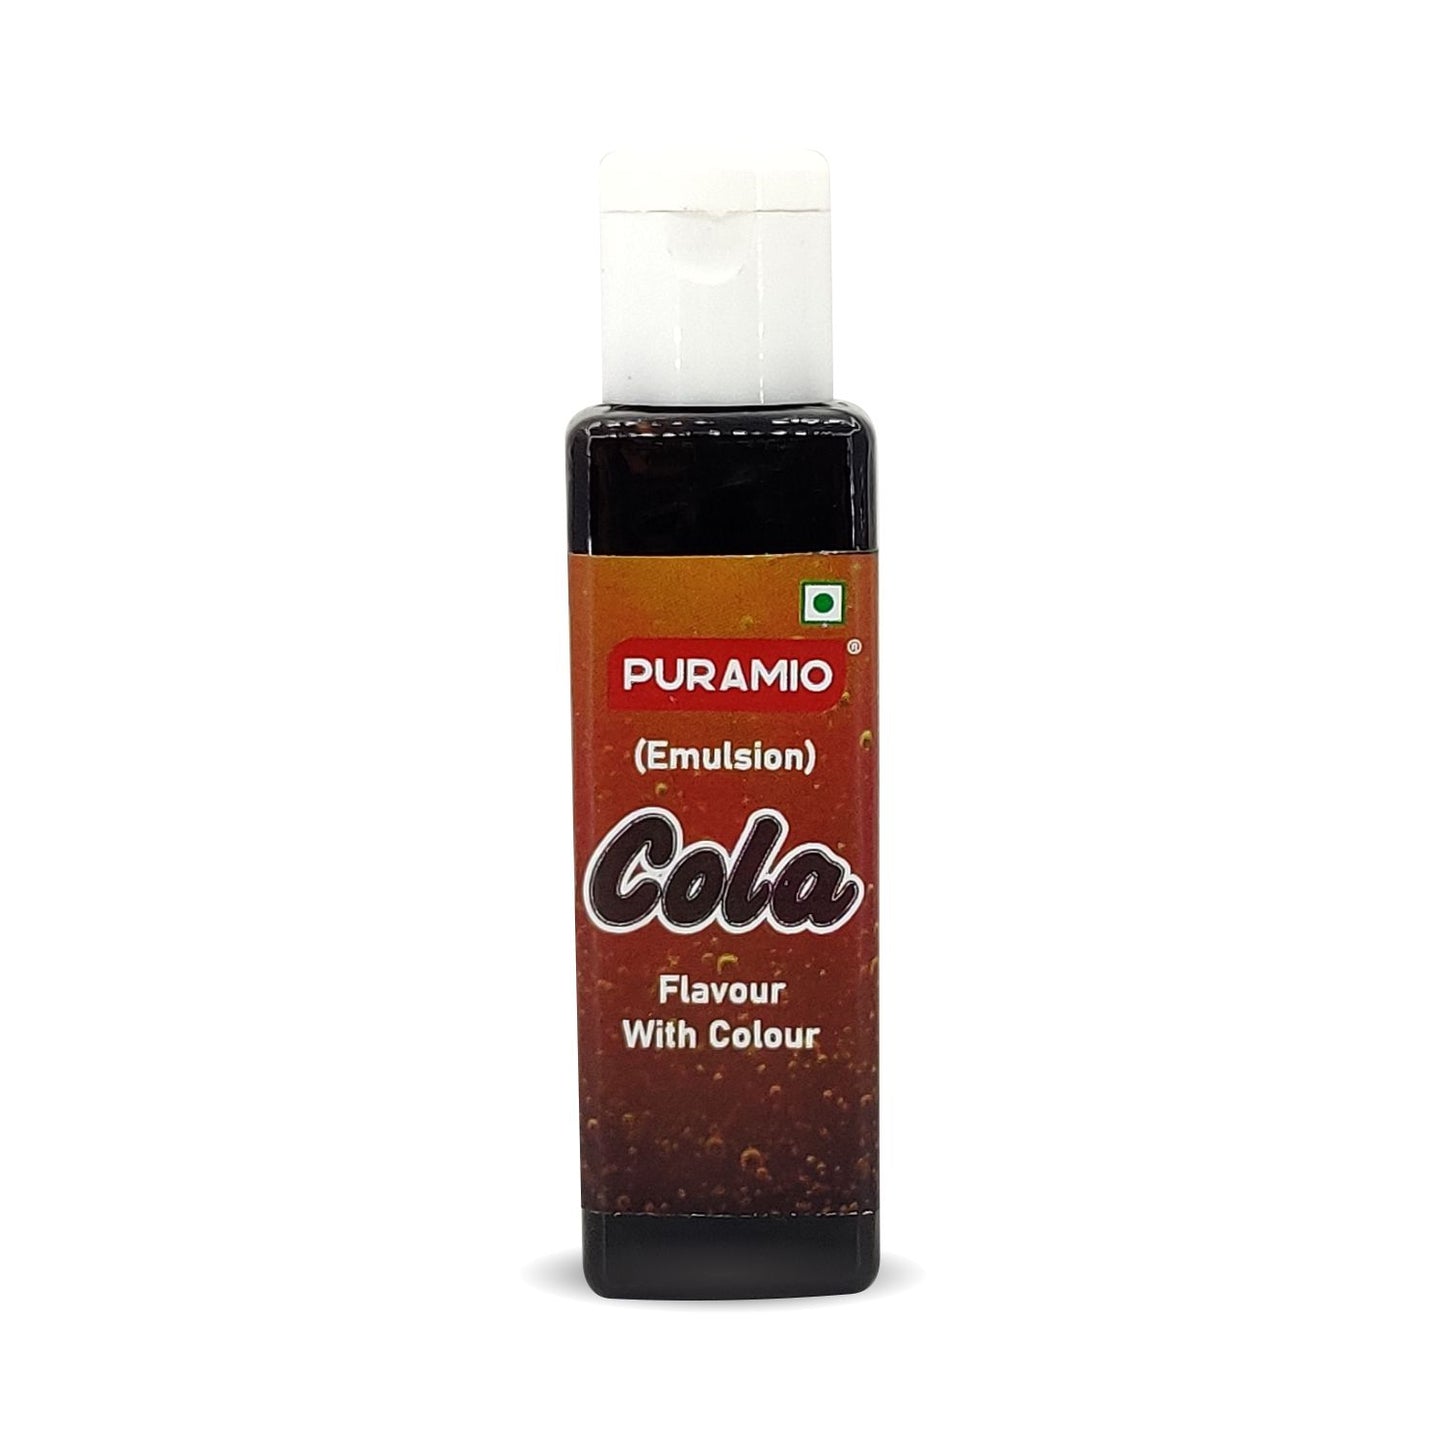 Puramio Cola - Flavour with Colour (Emulsion)